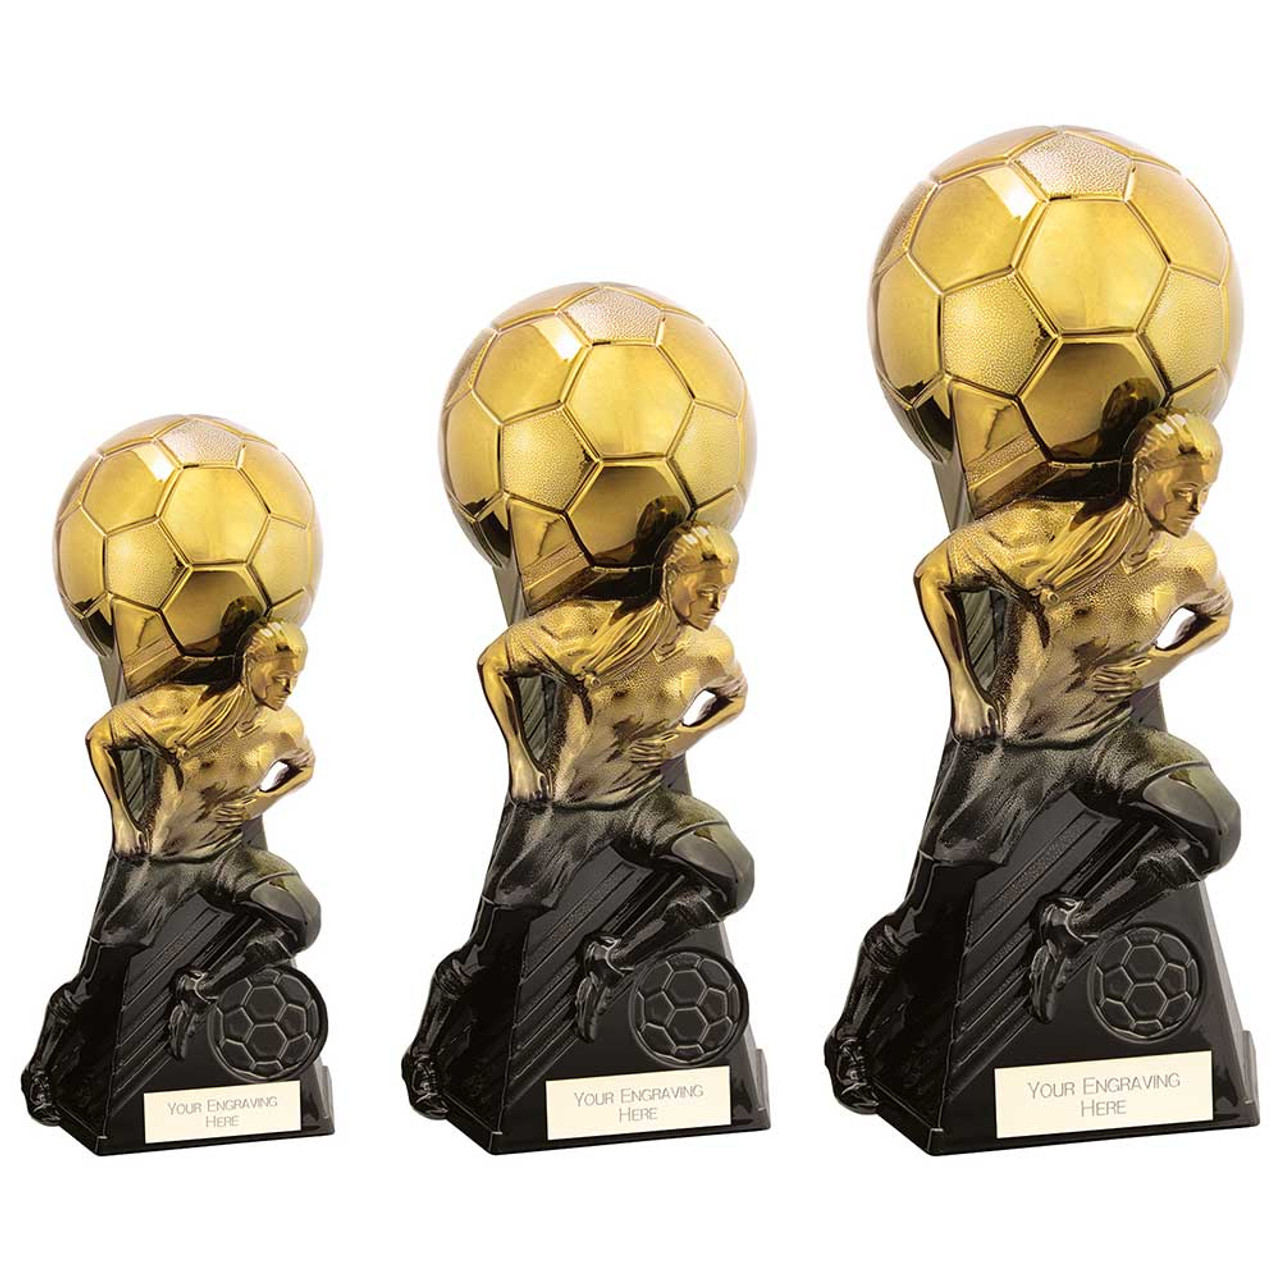 Trailblazer Female Fusion Gold & Carbon Black Football Award in 3 Sizes